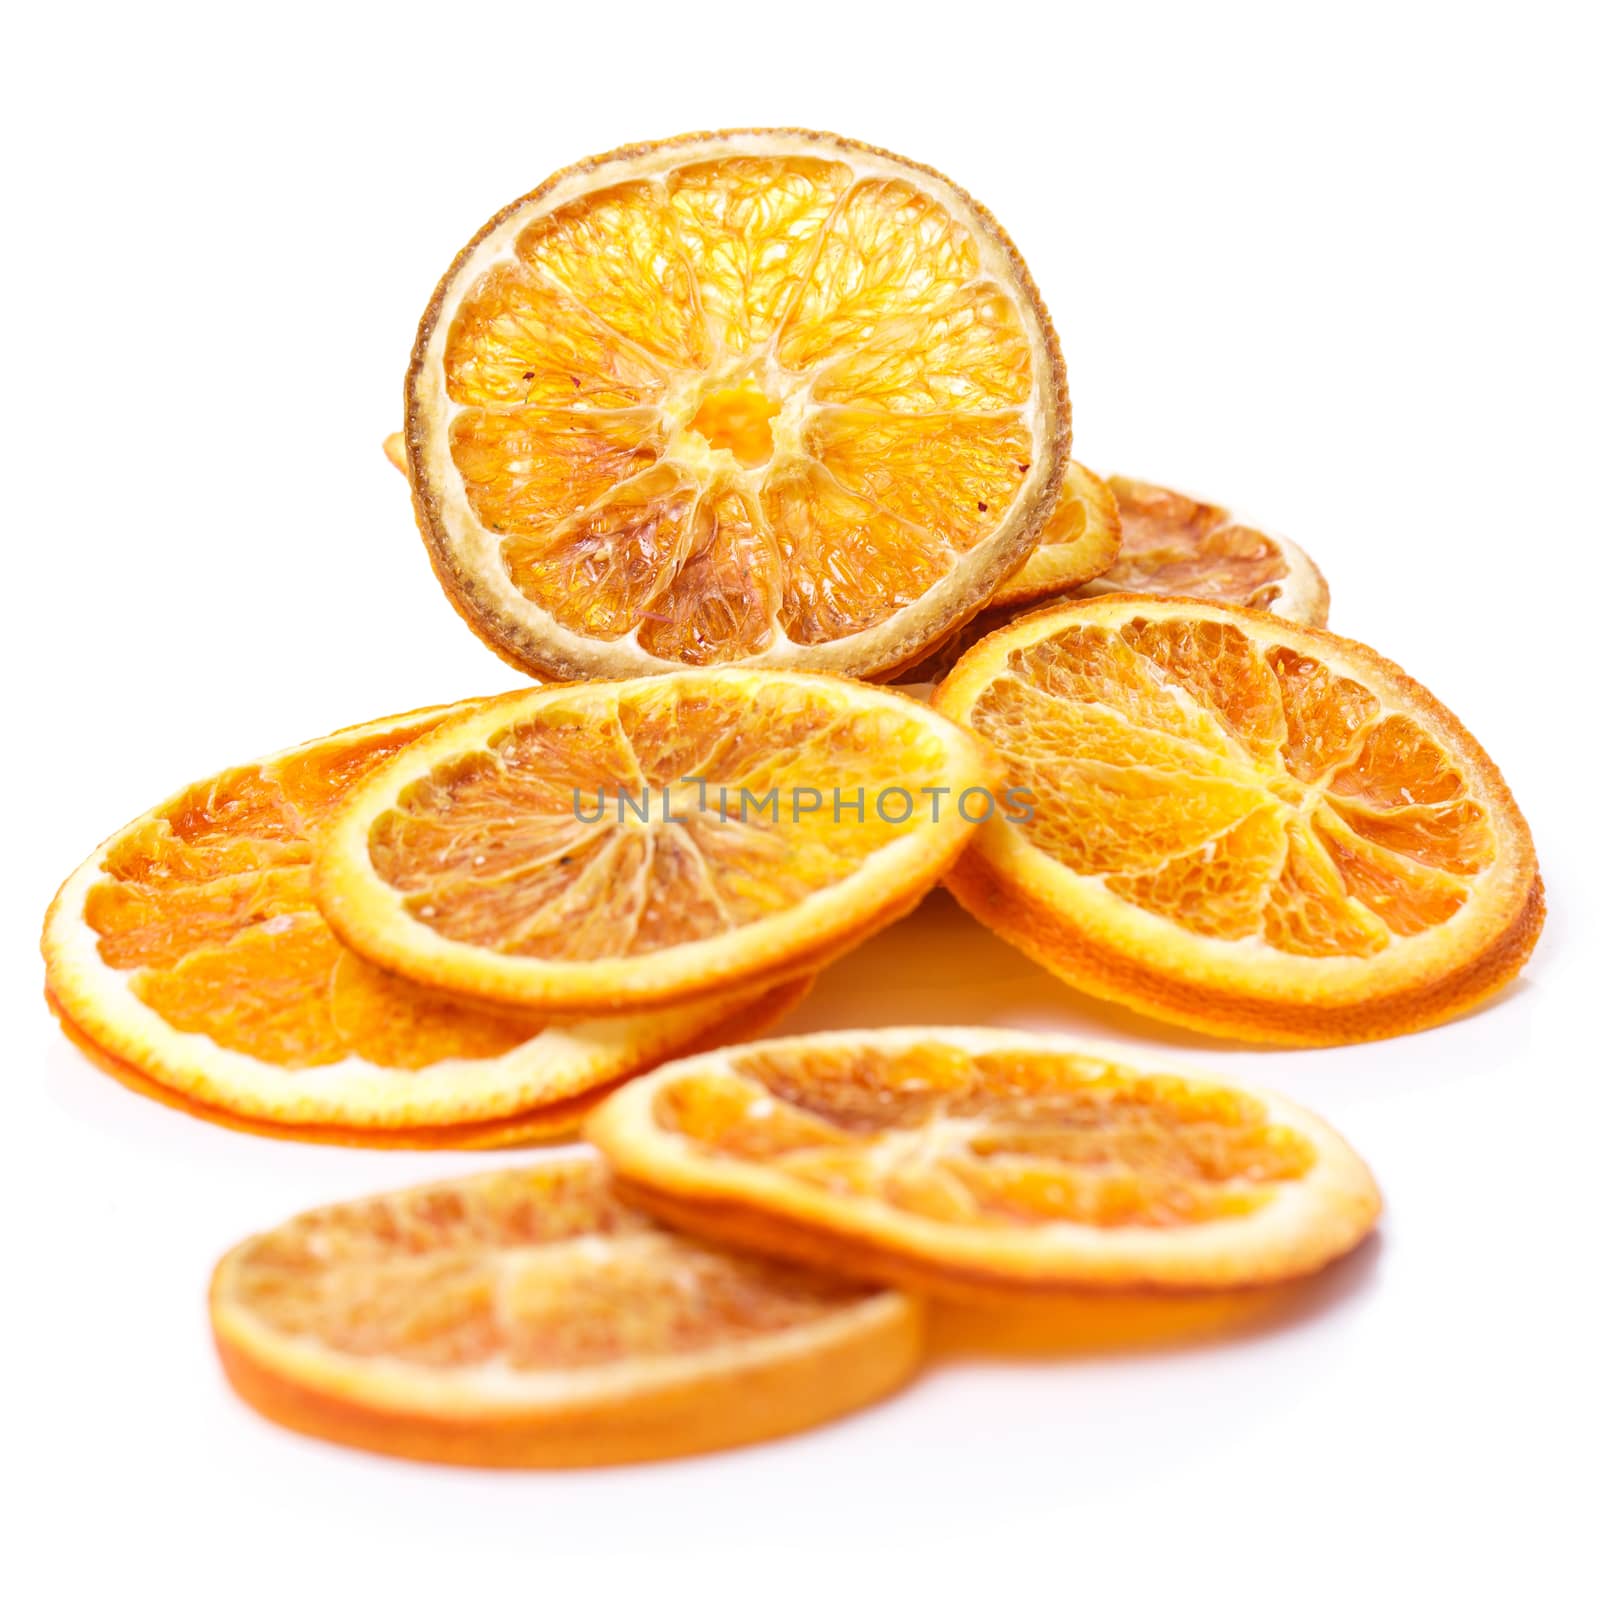 Dried orange on a white background